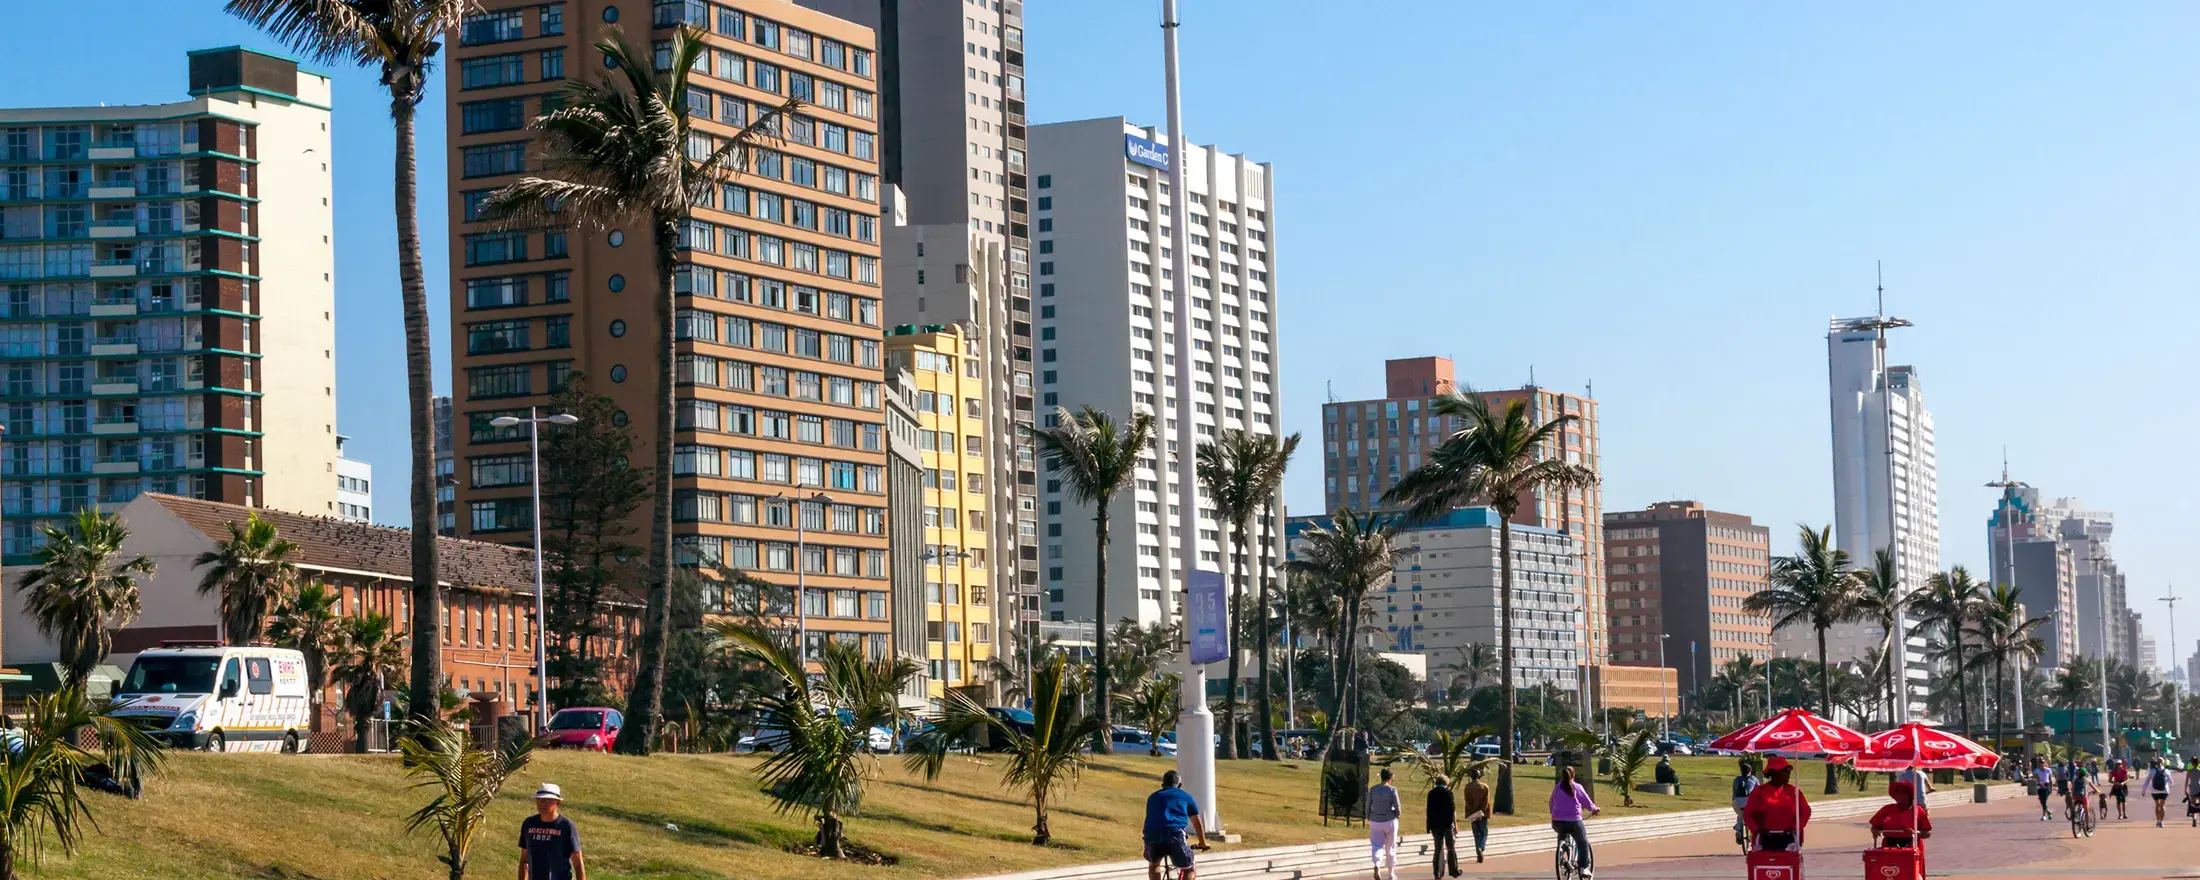 Durban, South Africa [Shutterstock/lcswart]